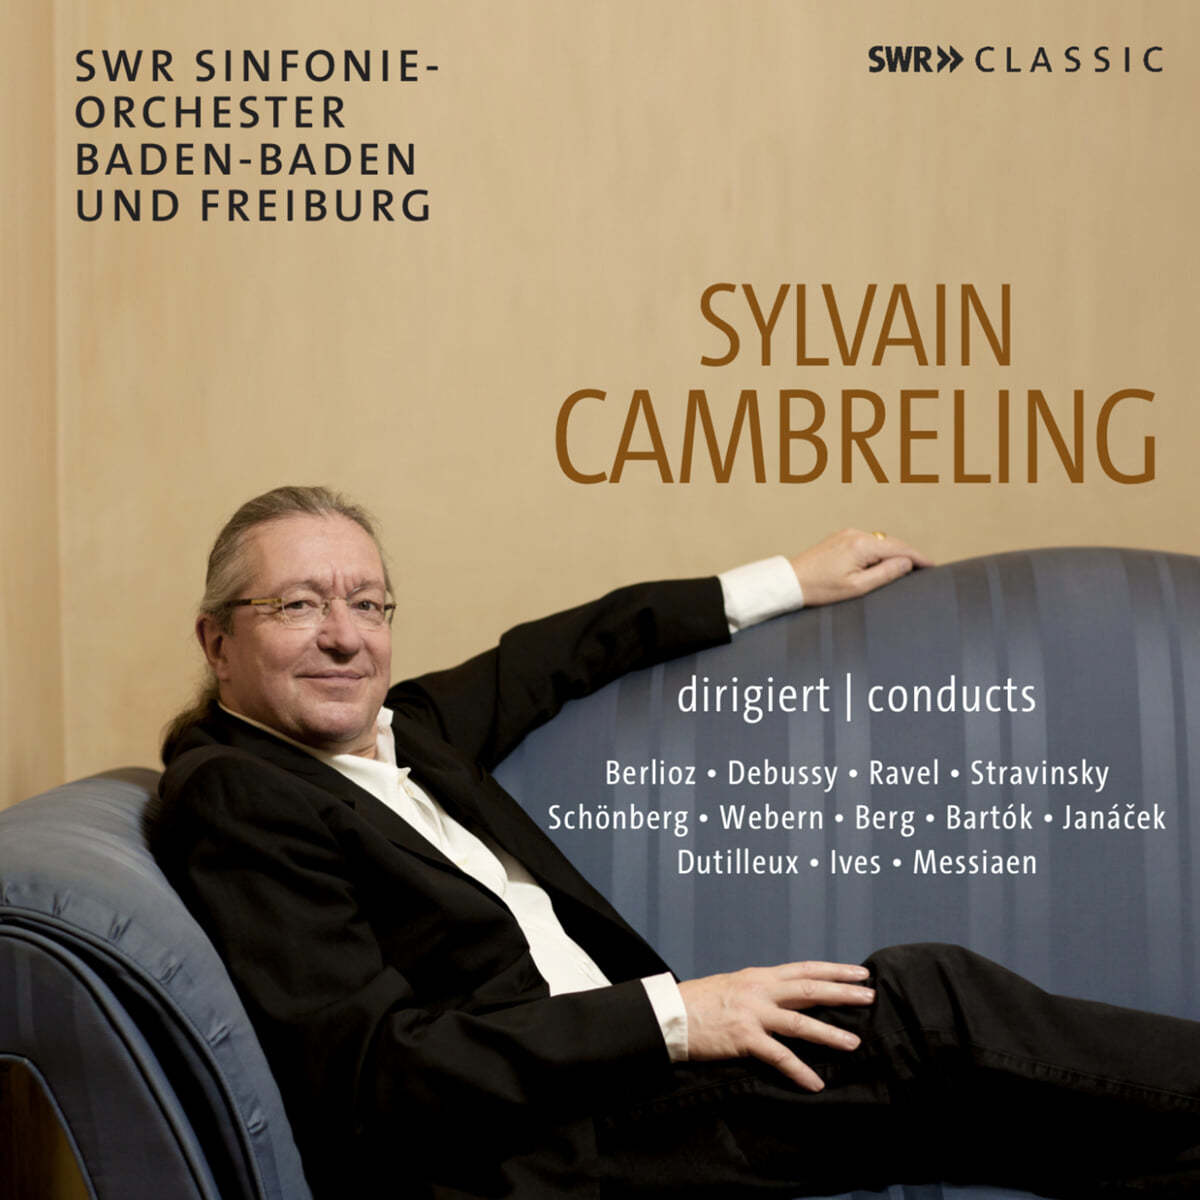 Sylvain Cambreling 실뱅 캄브를랭 SWR 레코딩 모음집 (SWR Recordings - Berlioz, Debussy, Ravel, Janacek, Webern, Berg etc)